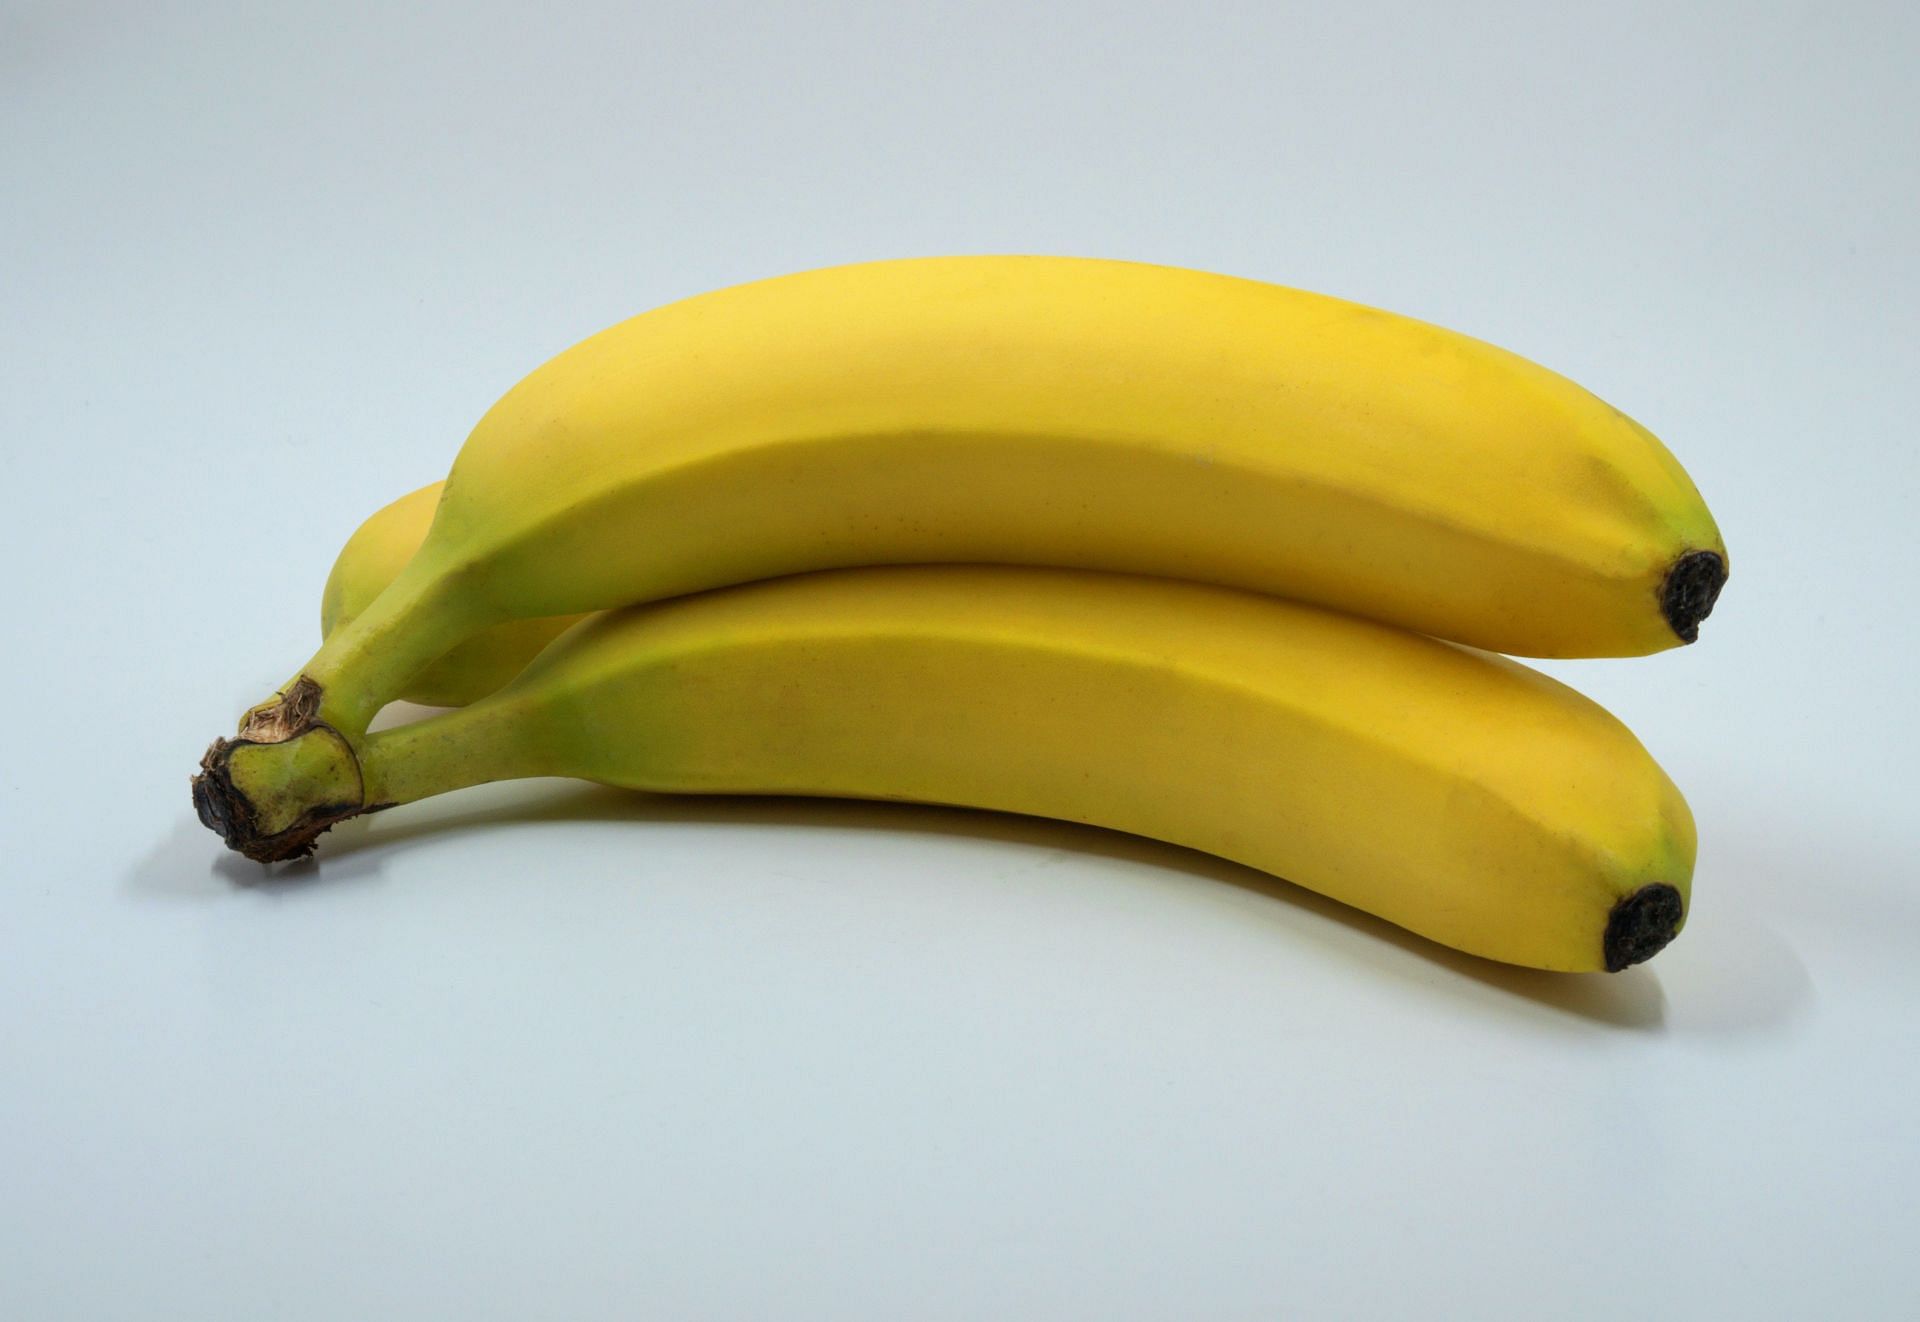 Eating bananas daily (Image via Unsplash/Brett)